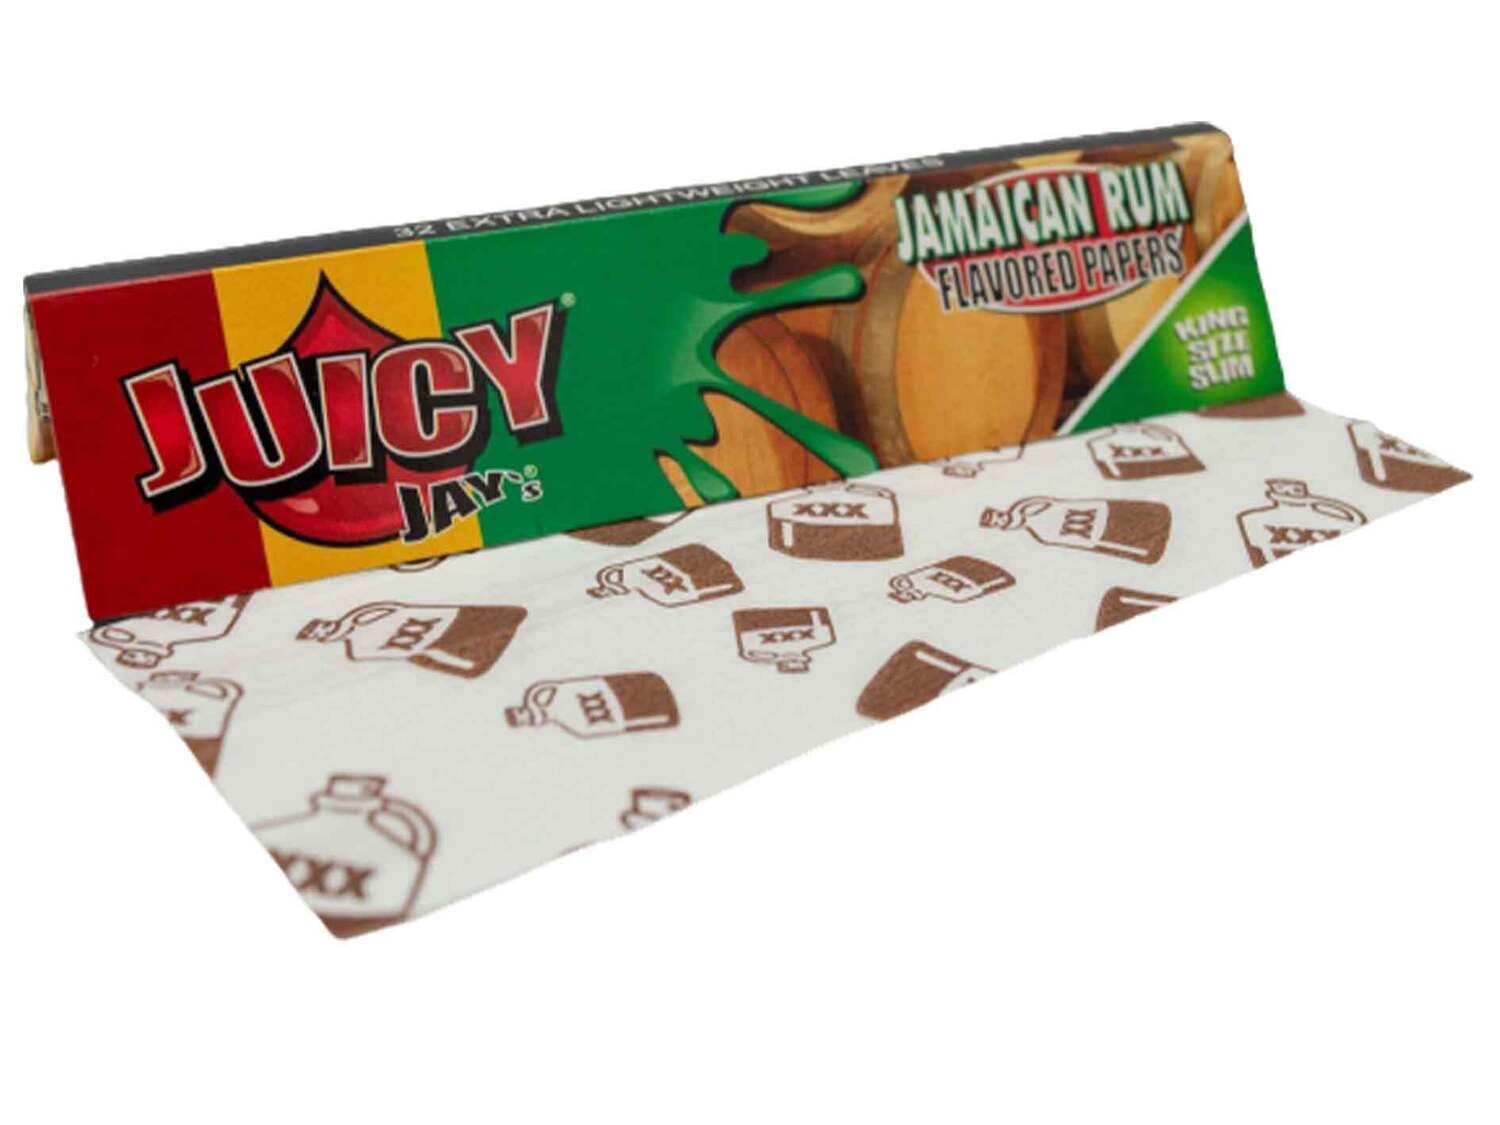 Juicy Jay's Jamaican Rum Papers 1 1/4